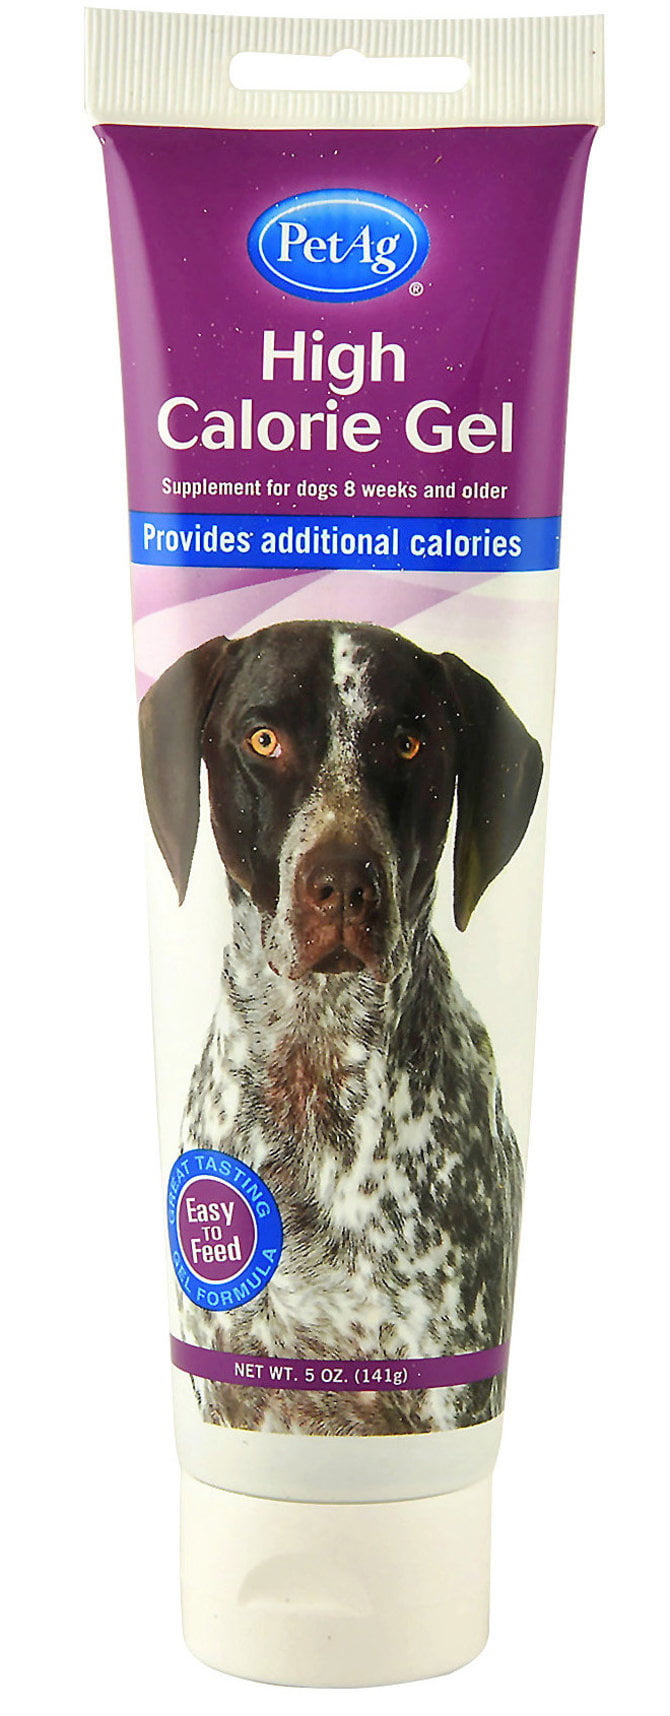 High Calorie Gel for Dogs - Walmart.com 